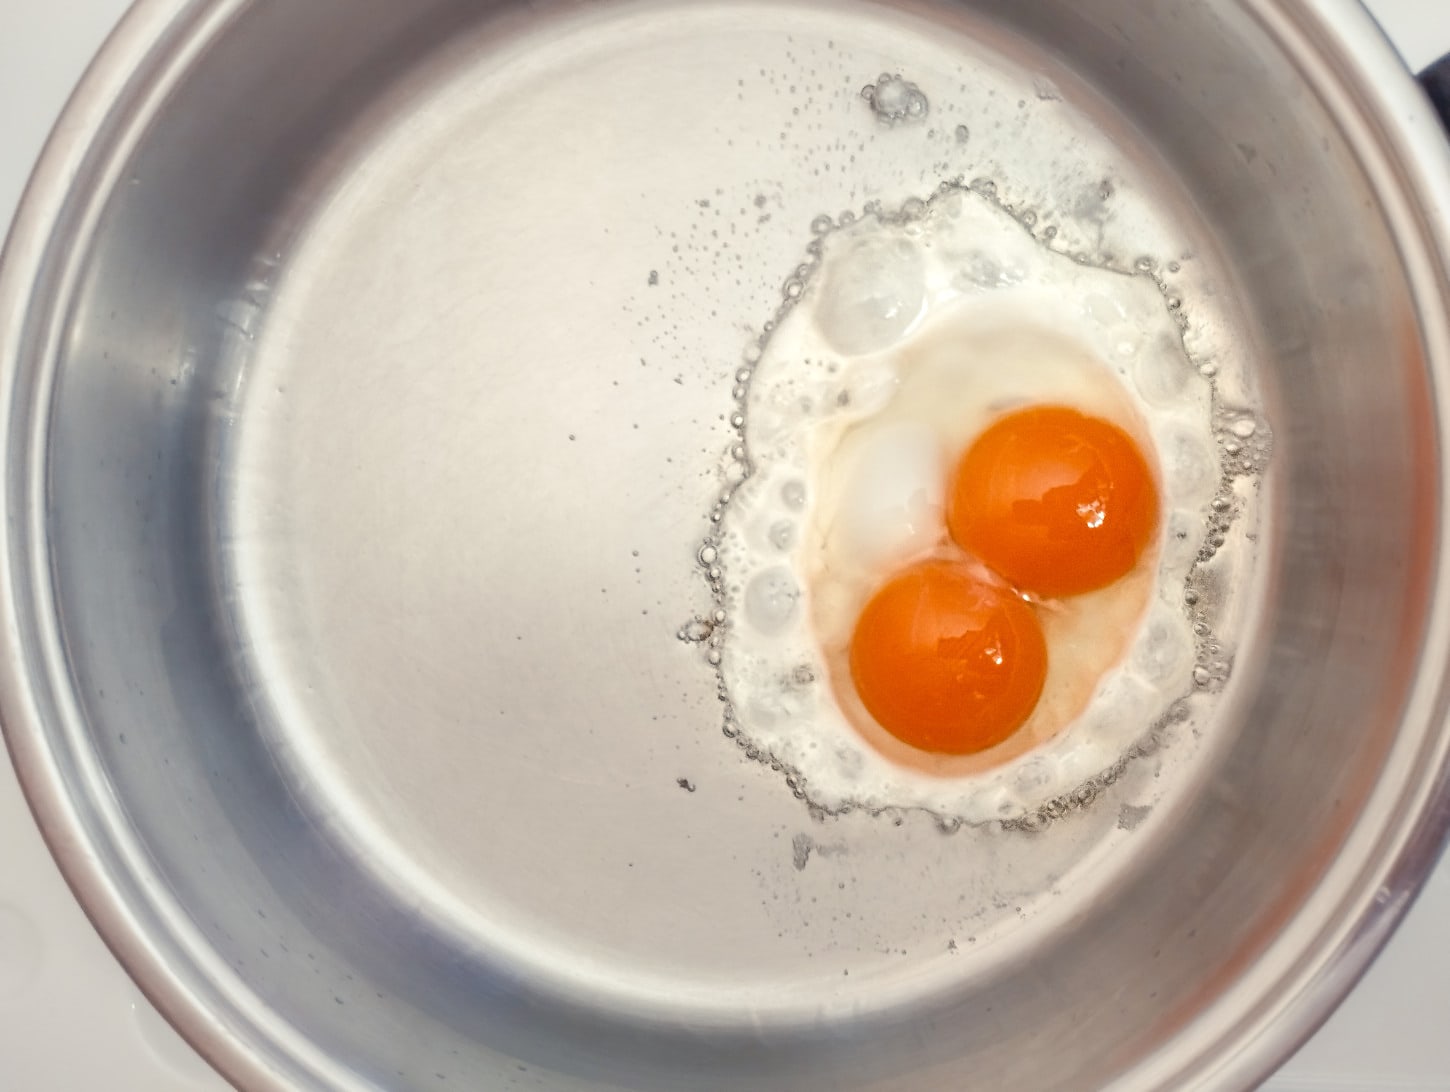 Double yolk egg, baking fresh organic egg in pan